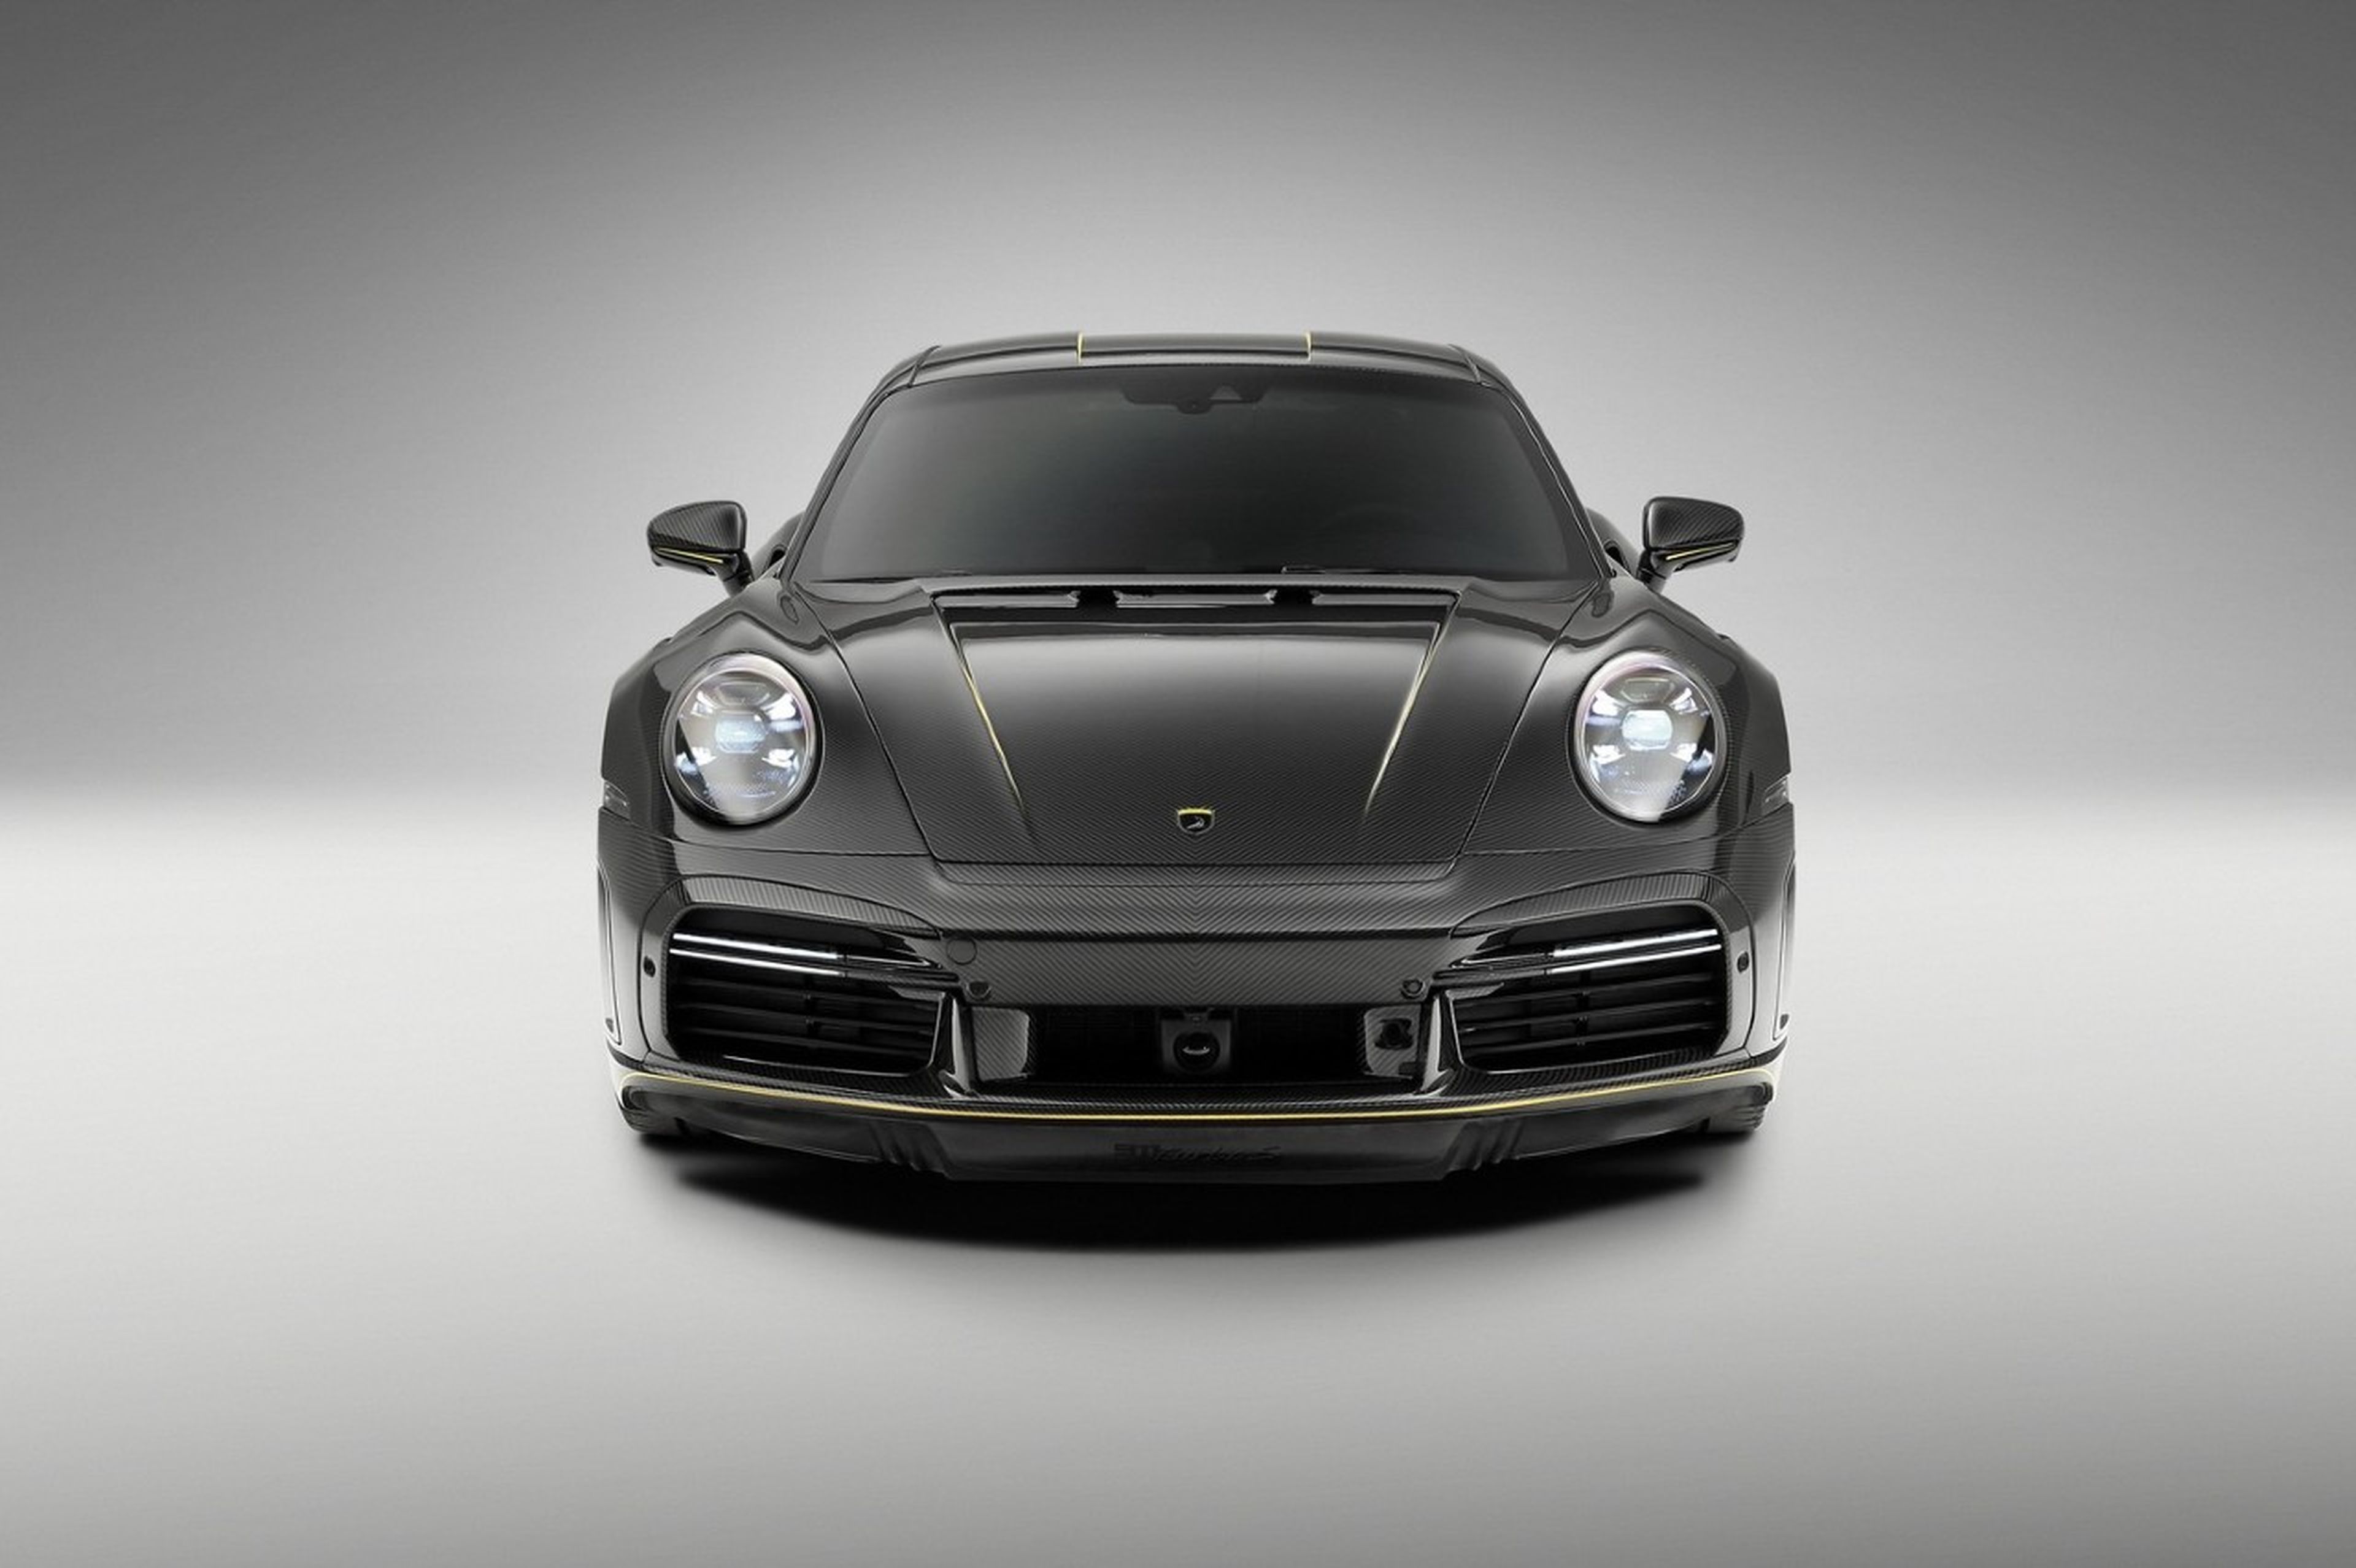 TopCar viste de fibra de carbono al Porsche 911 Turbo S